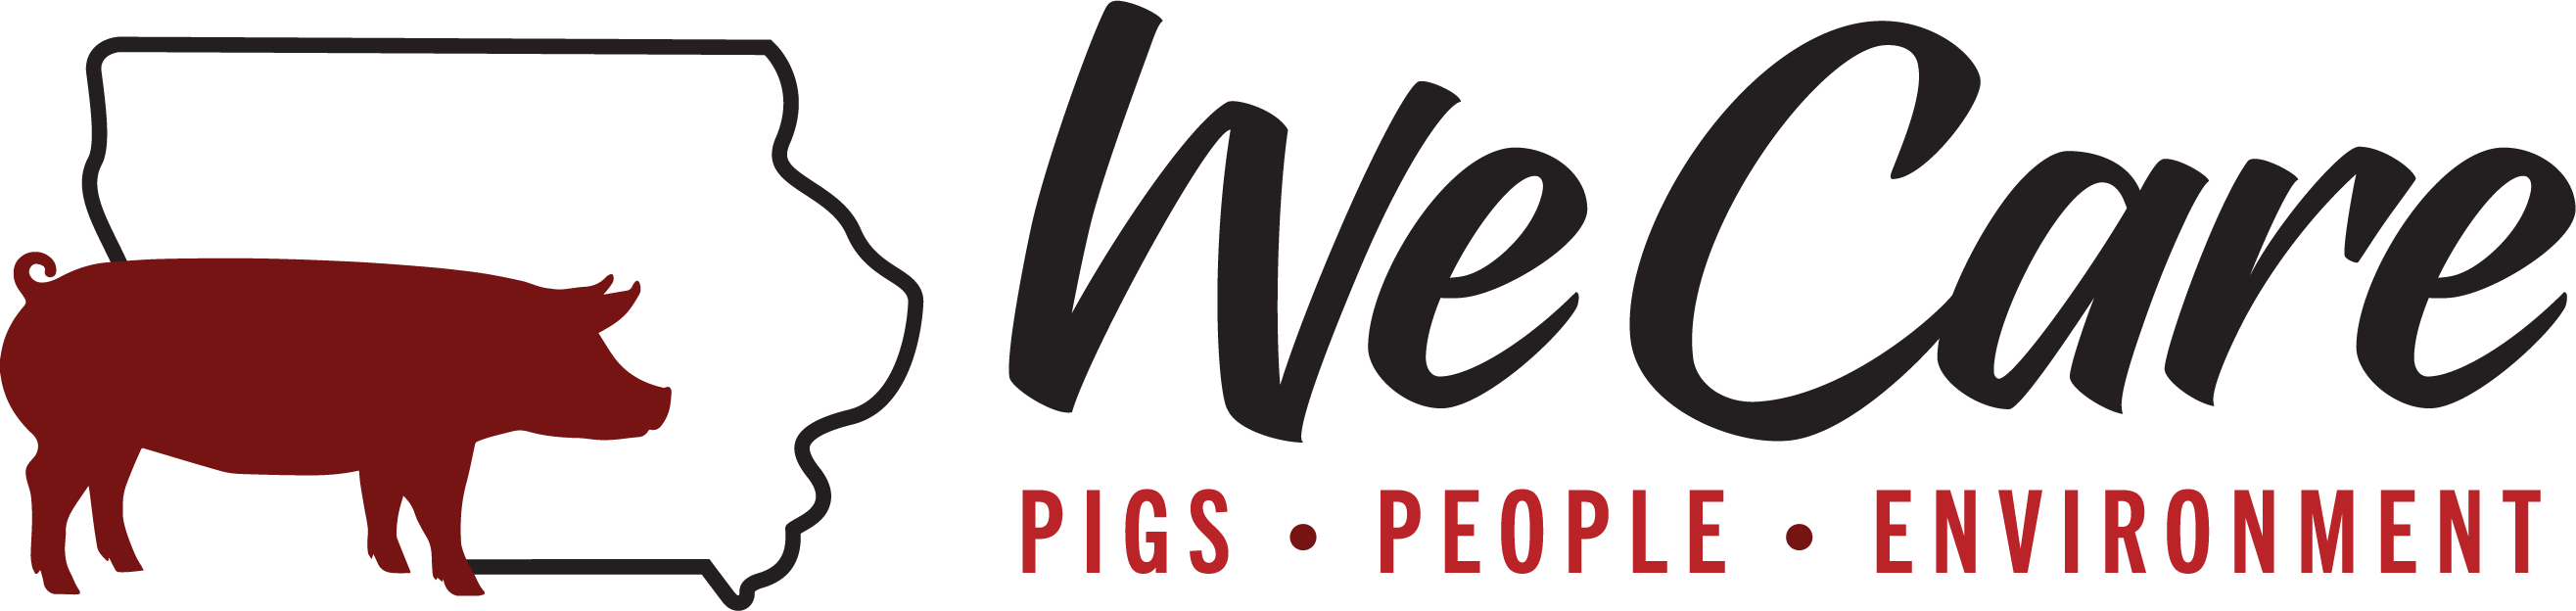 Iowa Pork We Care logo